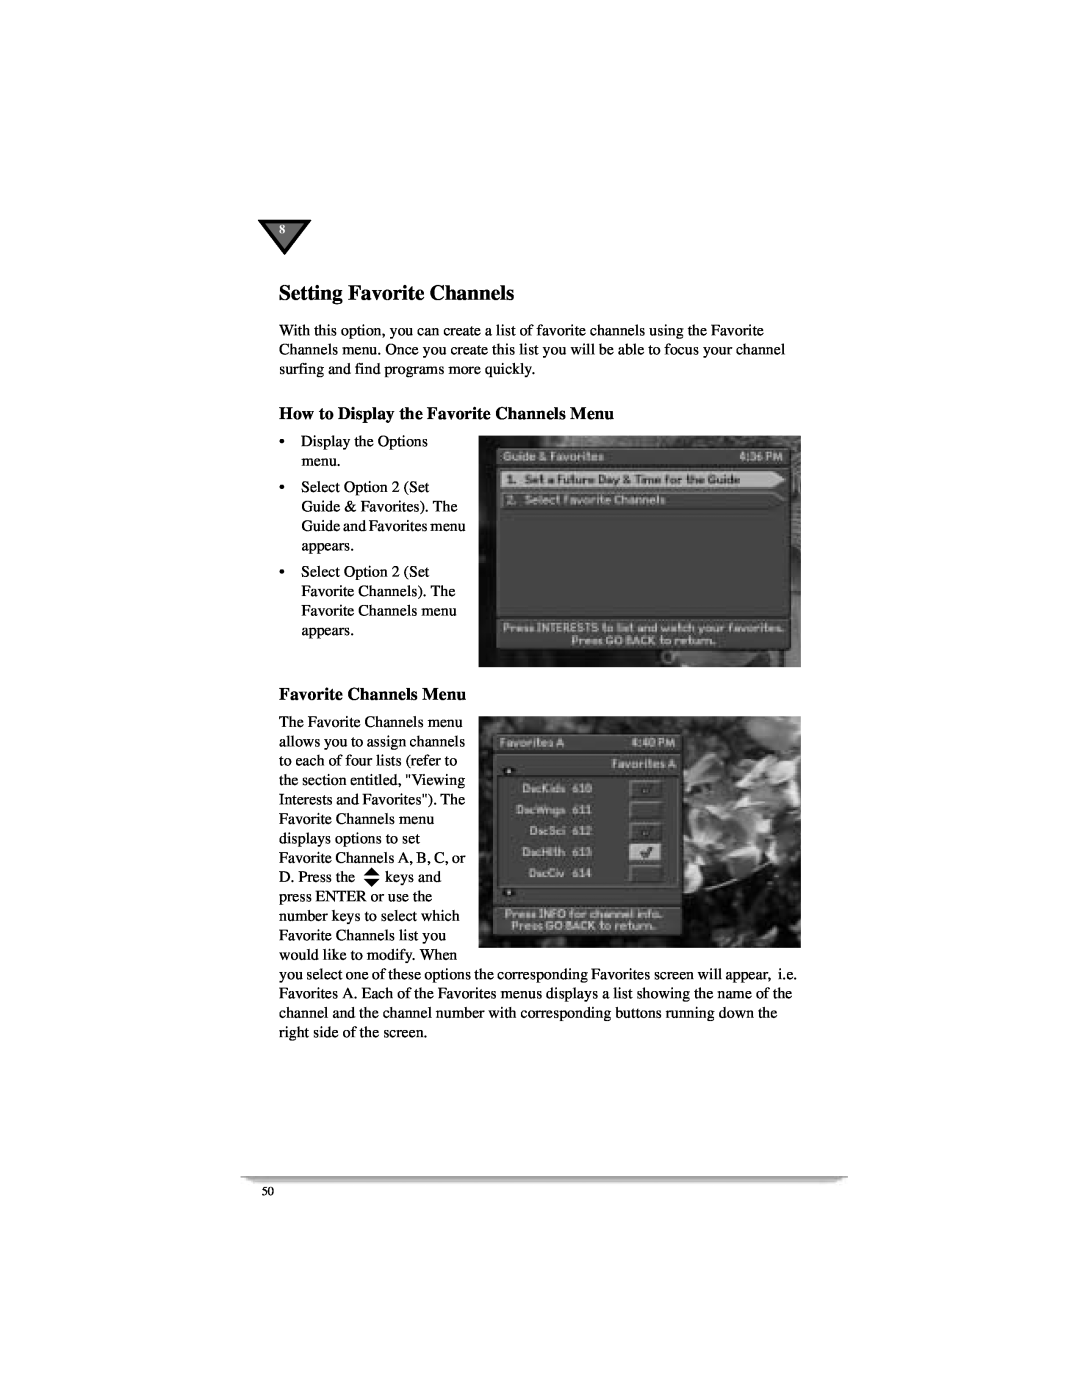 Motorola DSR405 manual Setting Favorite Channels, How to Display the Favorite Channels Menu 